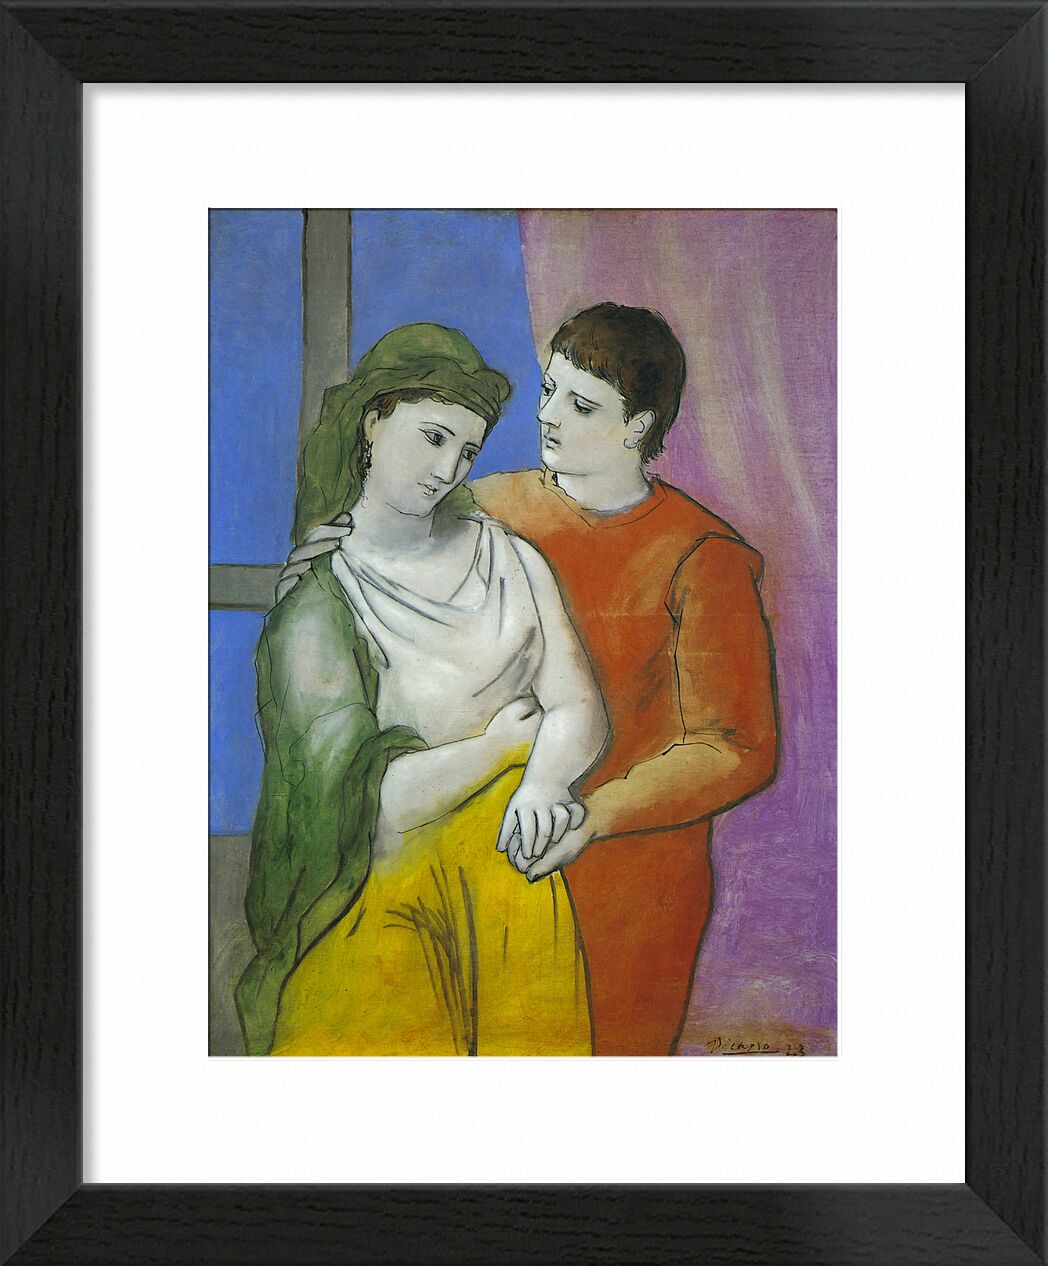 The Lovers - Picasso desde Bellas artes, Prodi Art, picasso, amor, dibujo, pintura, enamorado